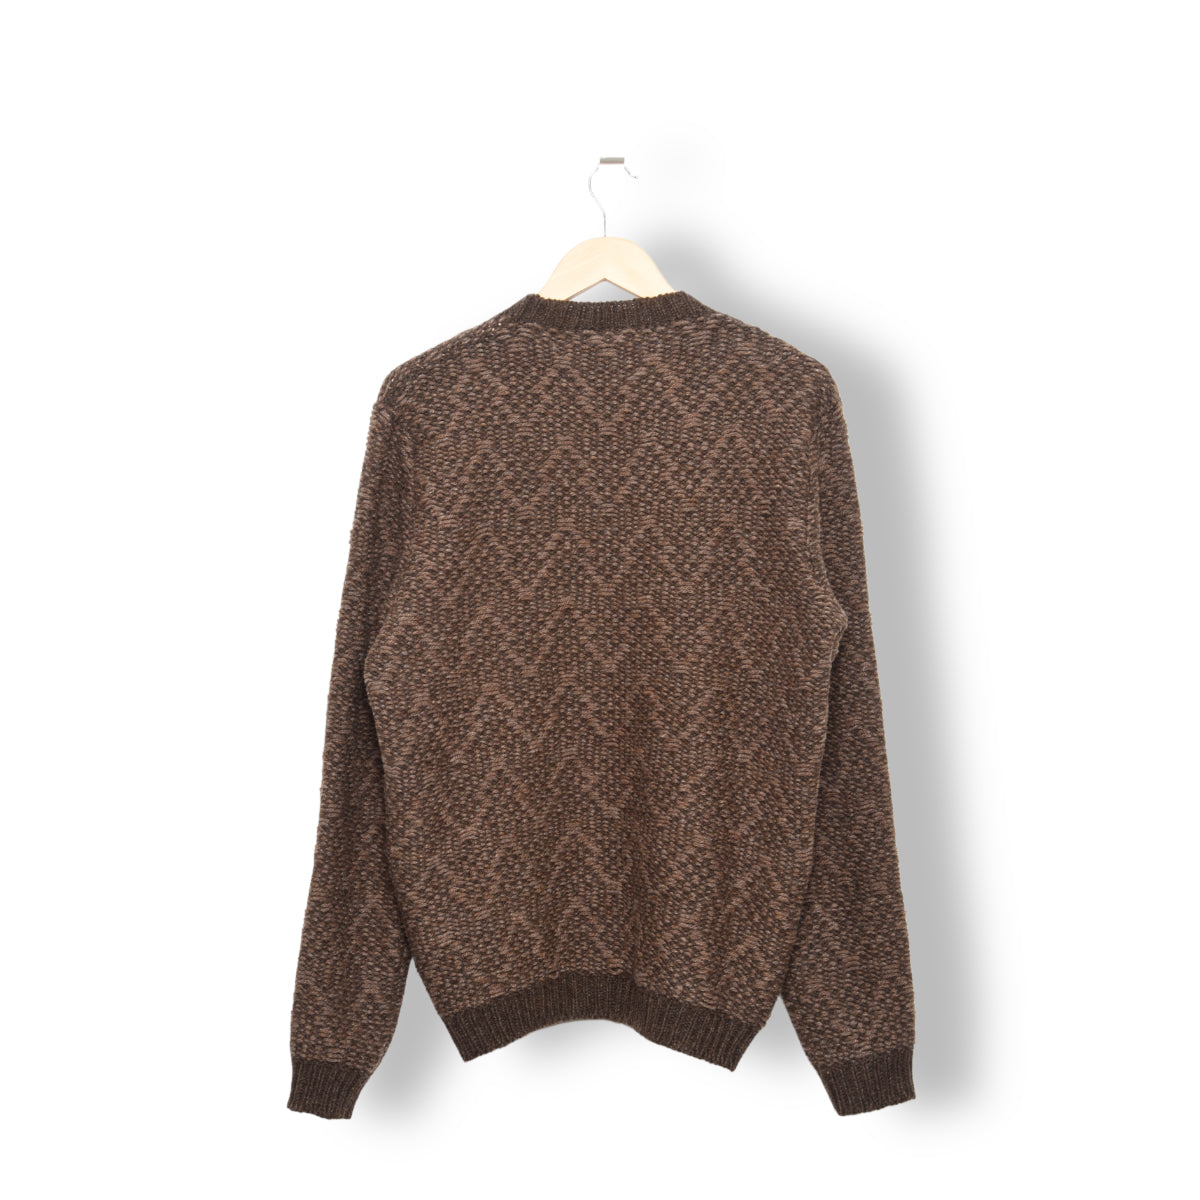 Frank Leder Handknitted Pullover V-Neck brown